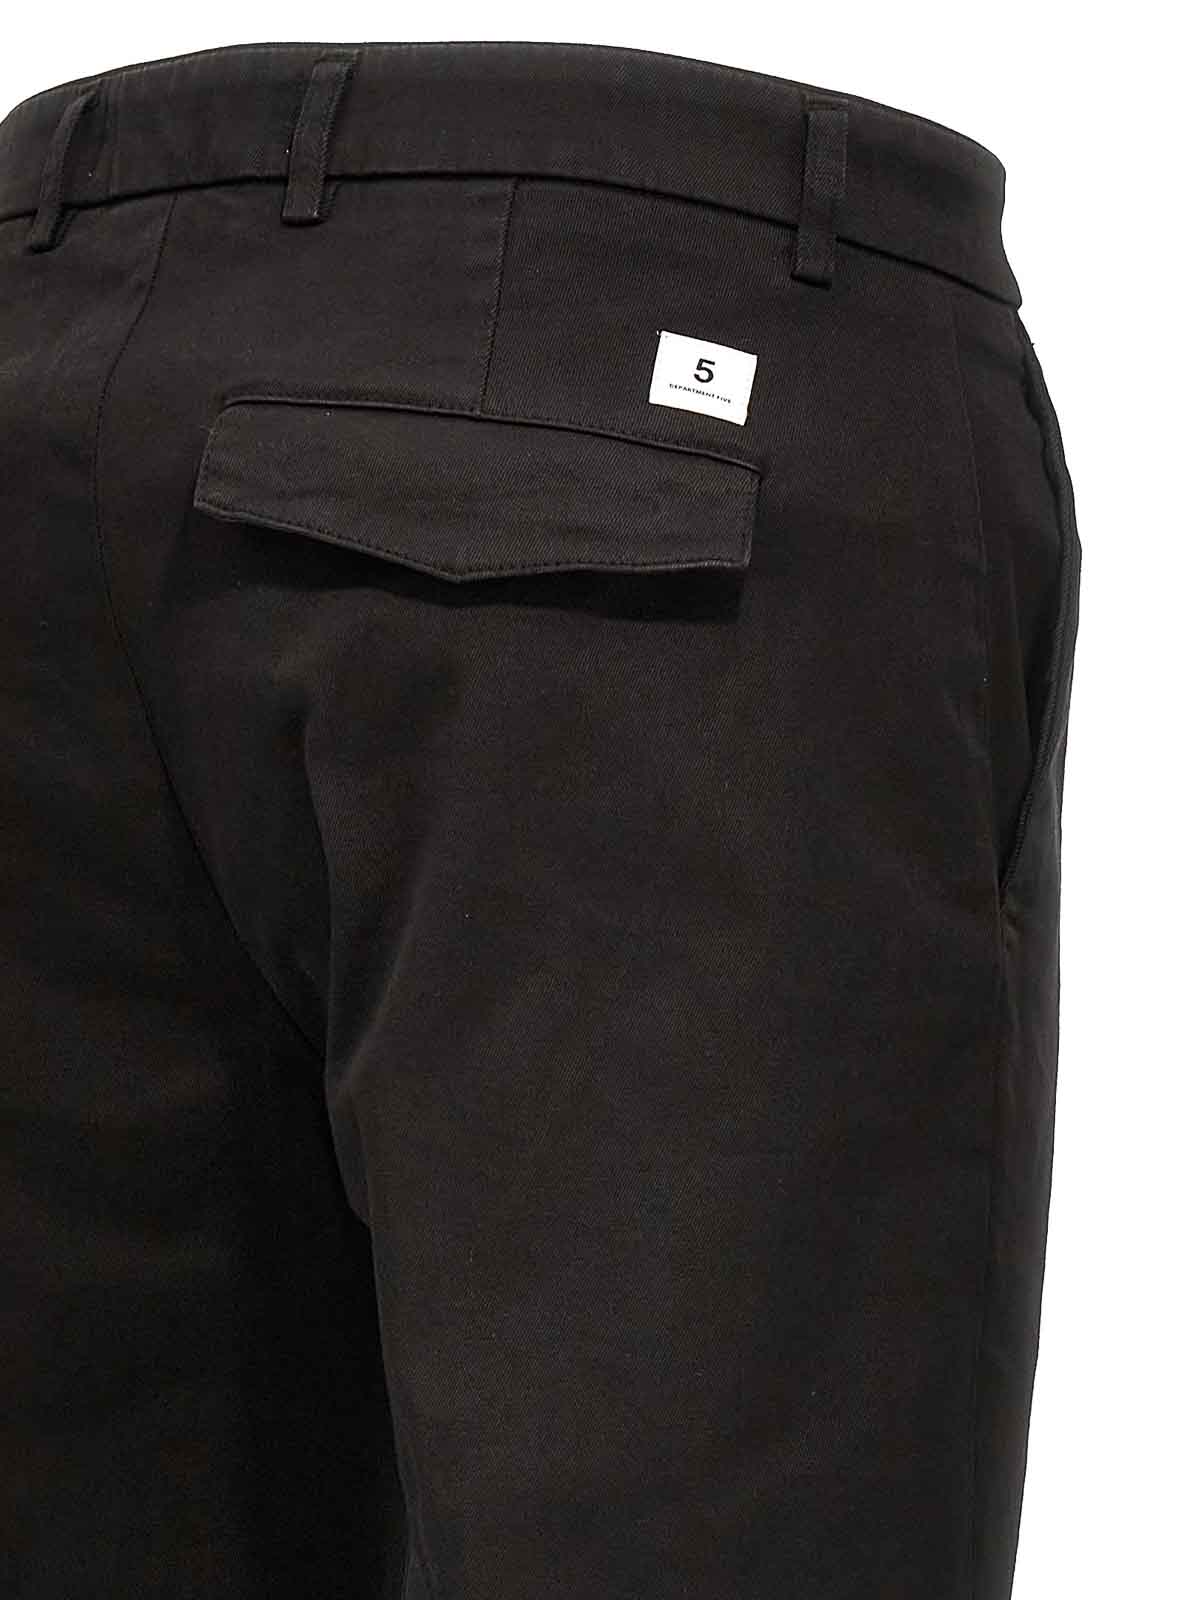 Shop Department 5 Prince Pants In Black